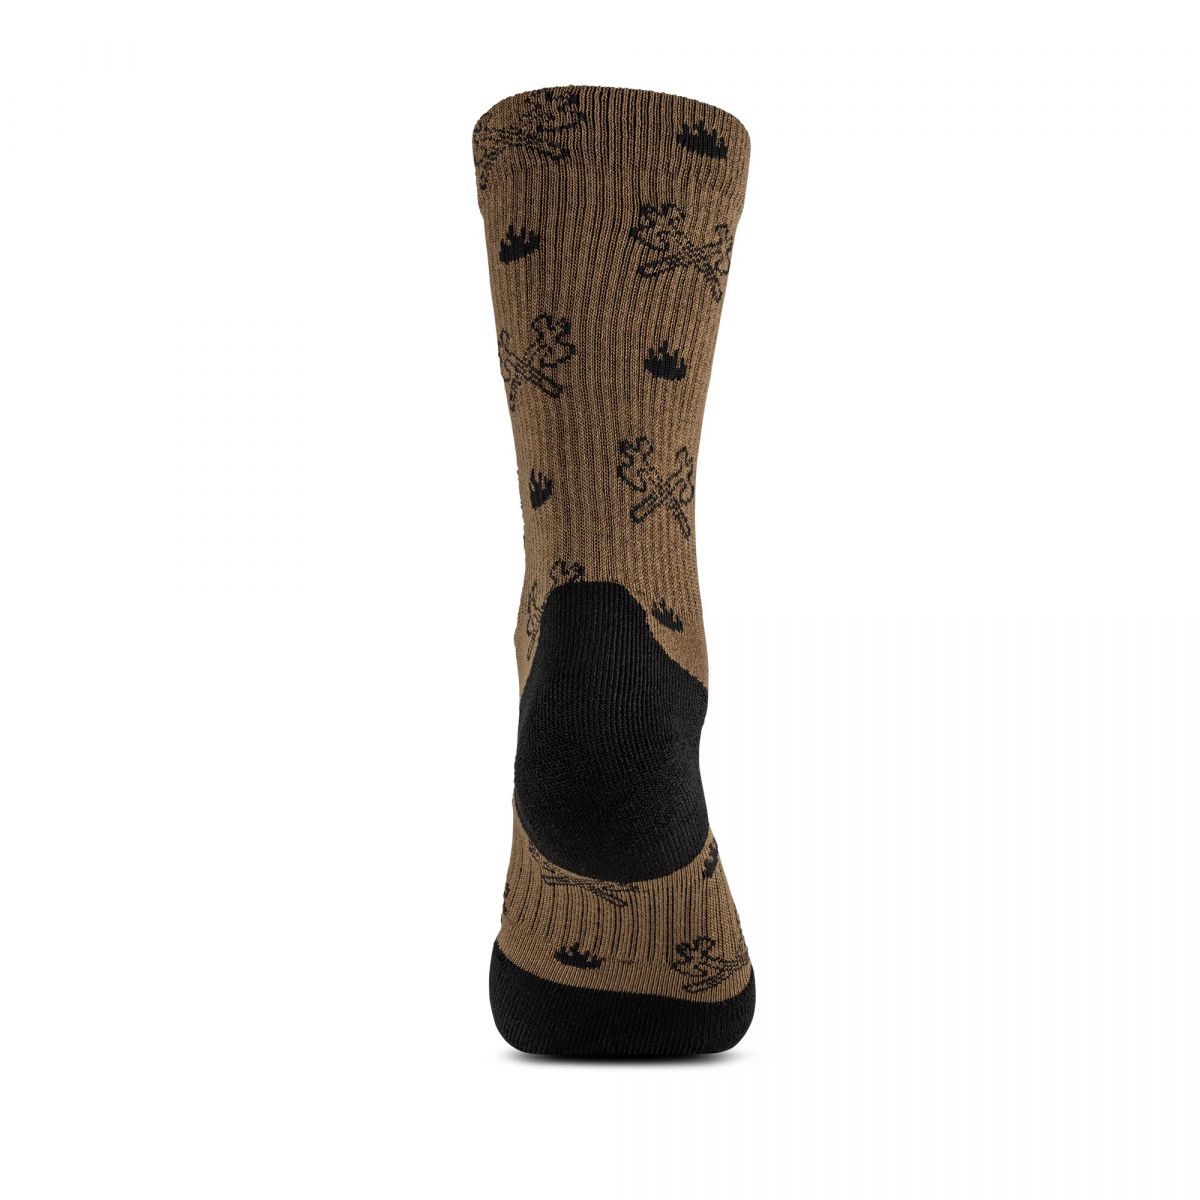 Шкарпетки 5.11. Модель Sock and Awe Crossed Axe. Розмір M. 5